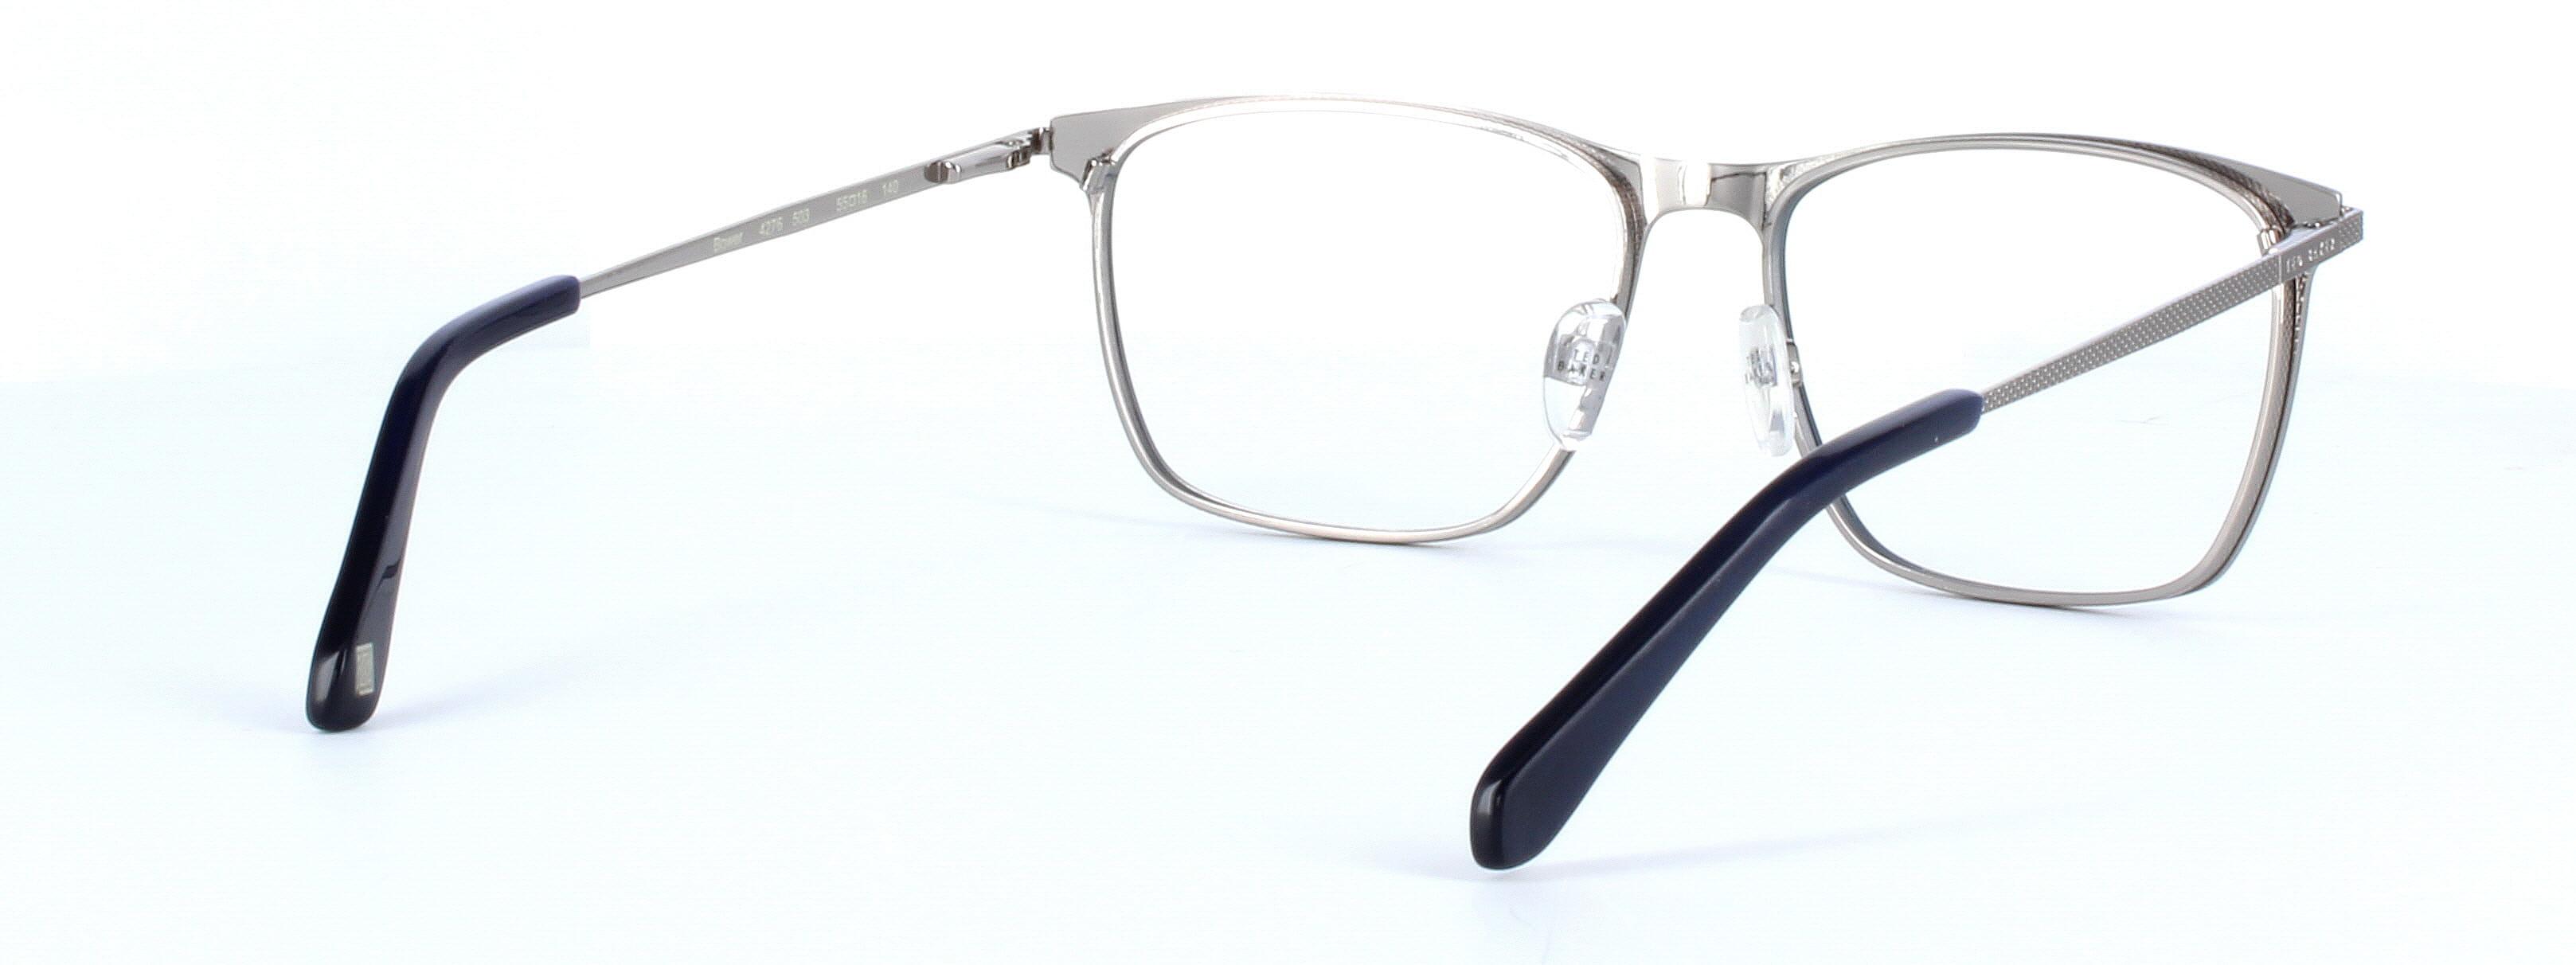 Ted Baker 4276 - Unisex designer metal glasses frame - blue and silver - image view 4